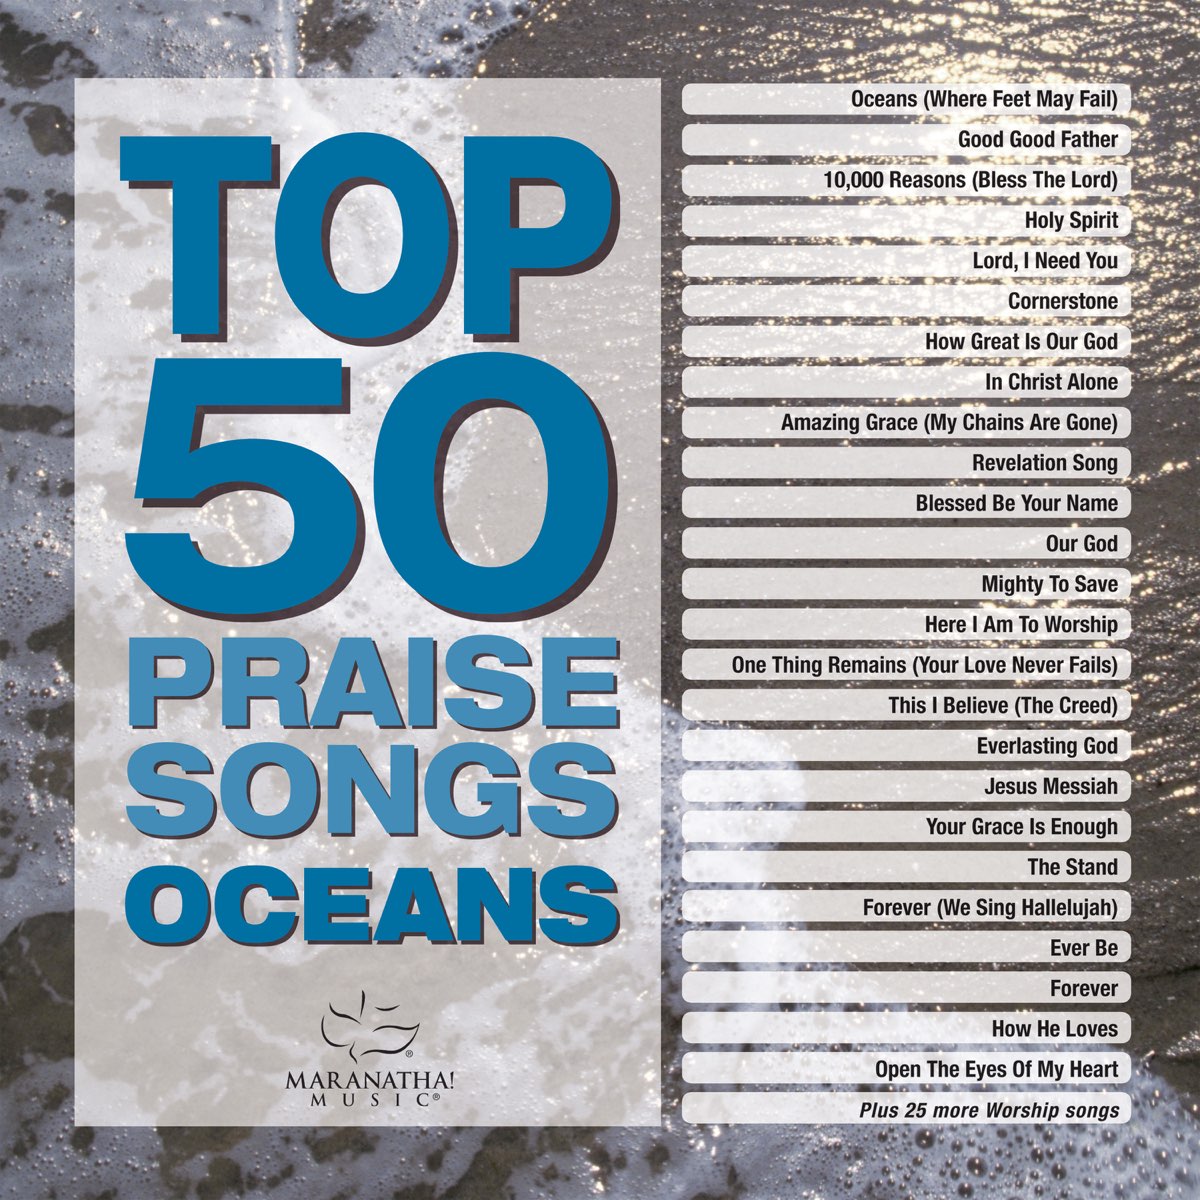 Христианские песни океан